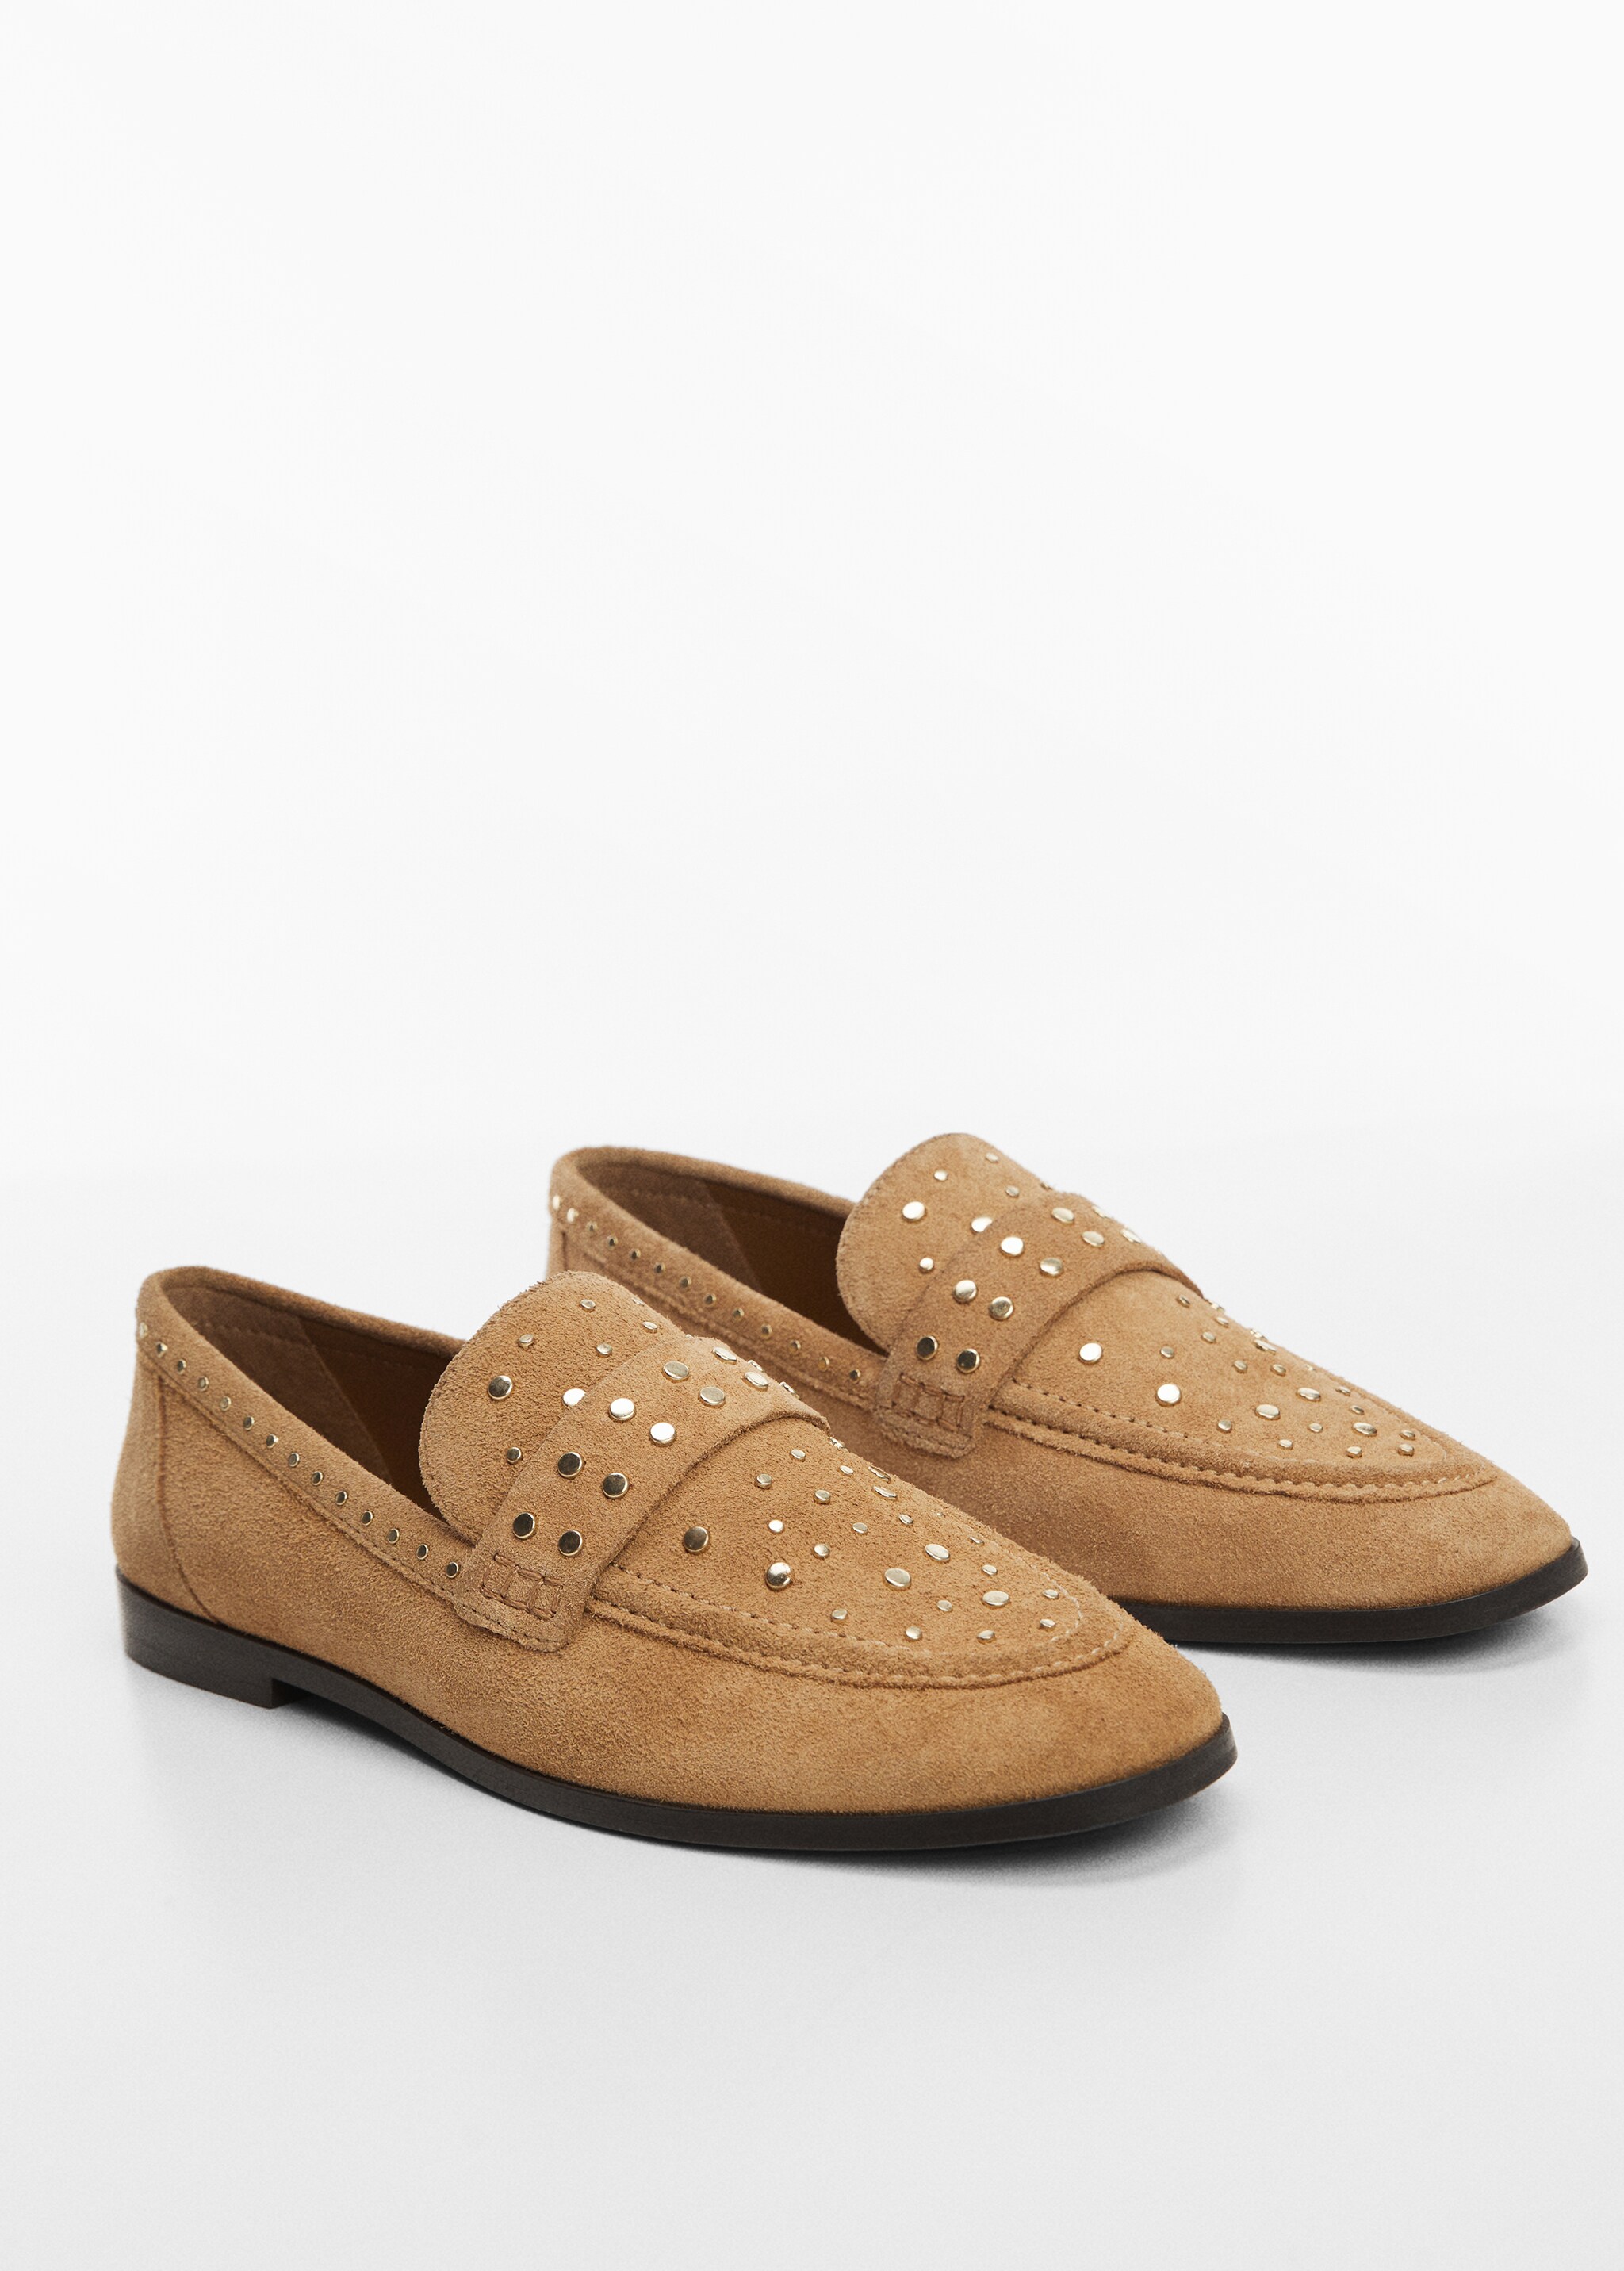 Studded leather loafers - Medium plane